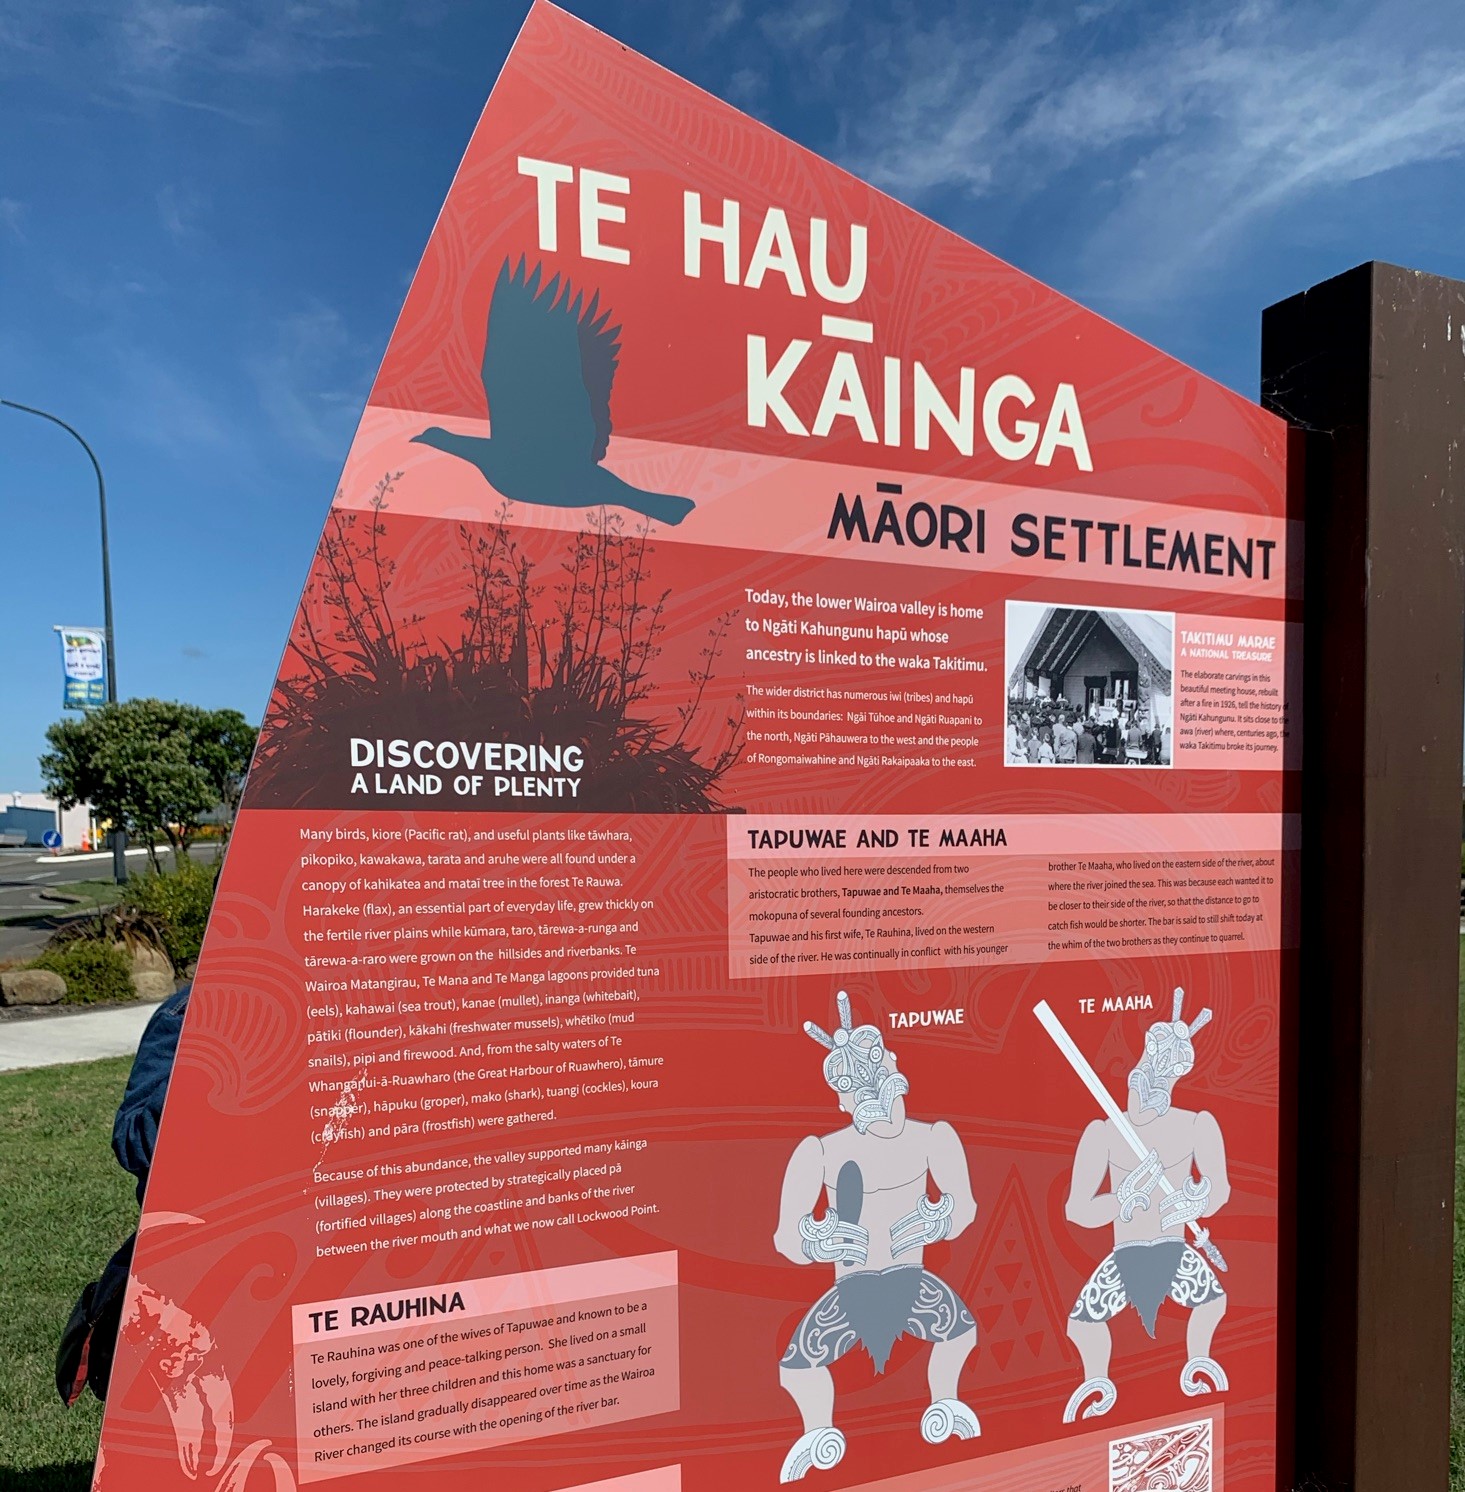 A storyboard of the Māori settlement history of Te Wairoa.  